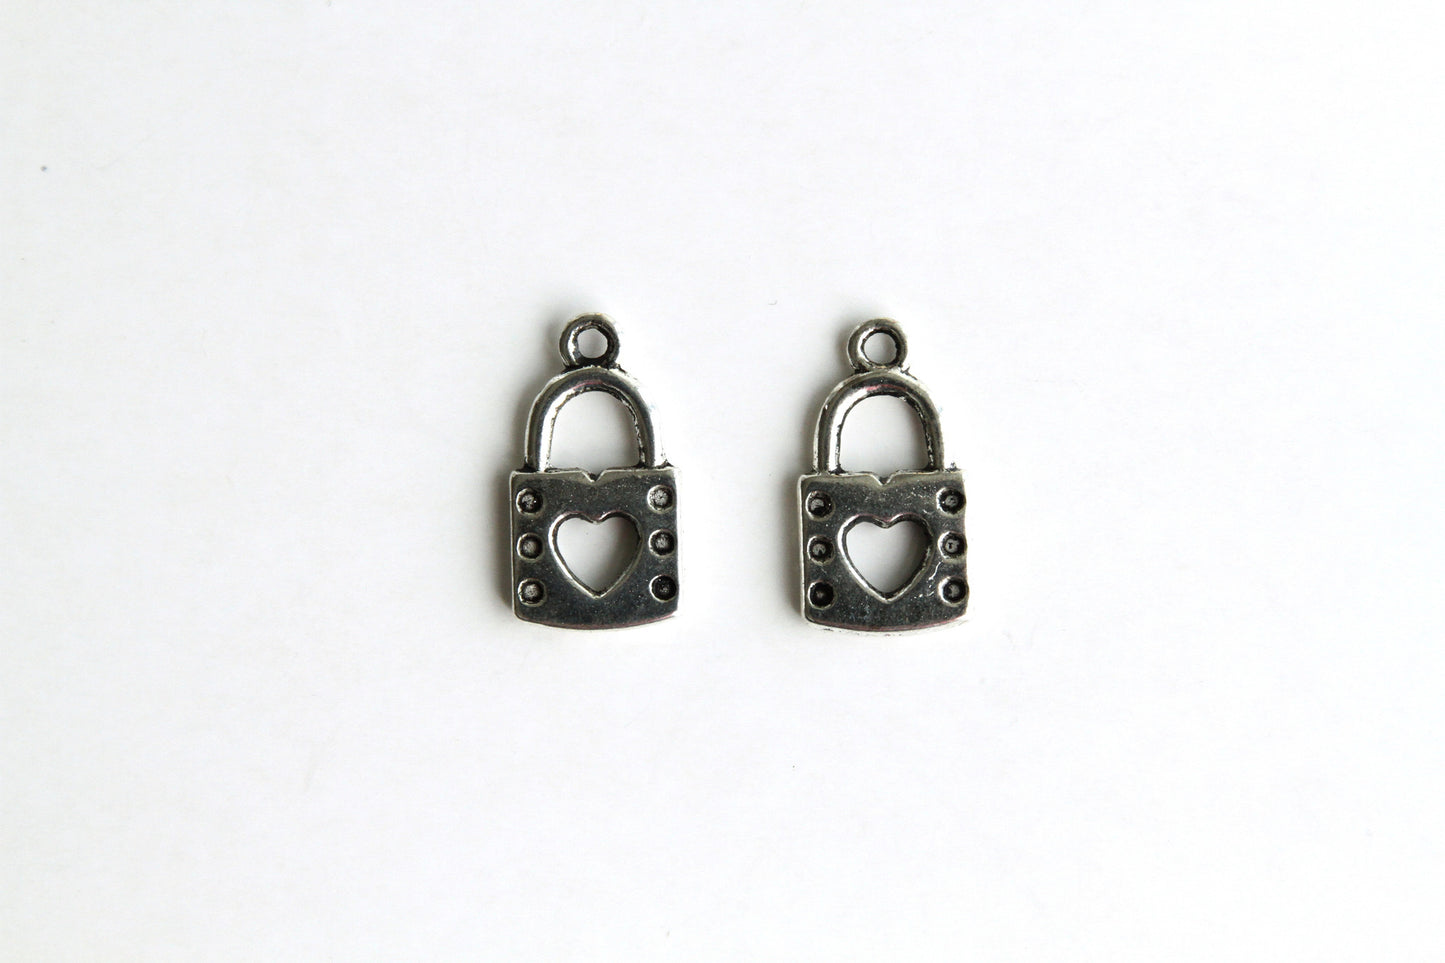 Charm - Lock with Heart Shape Key Hole, Antique Silver - KEY Handmade
 - 1